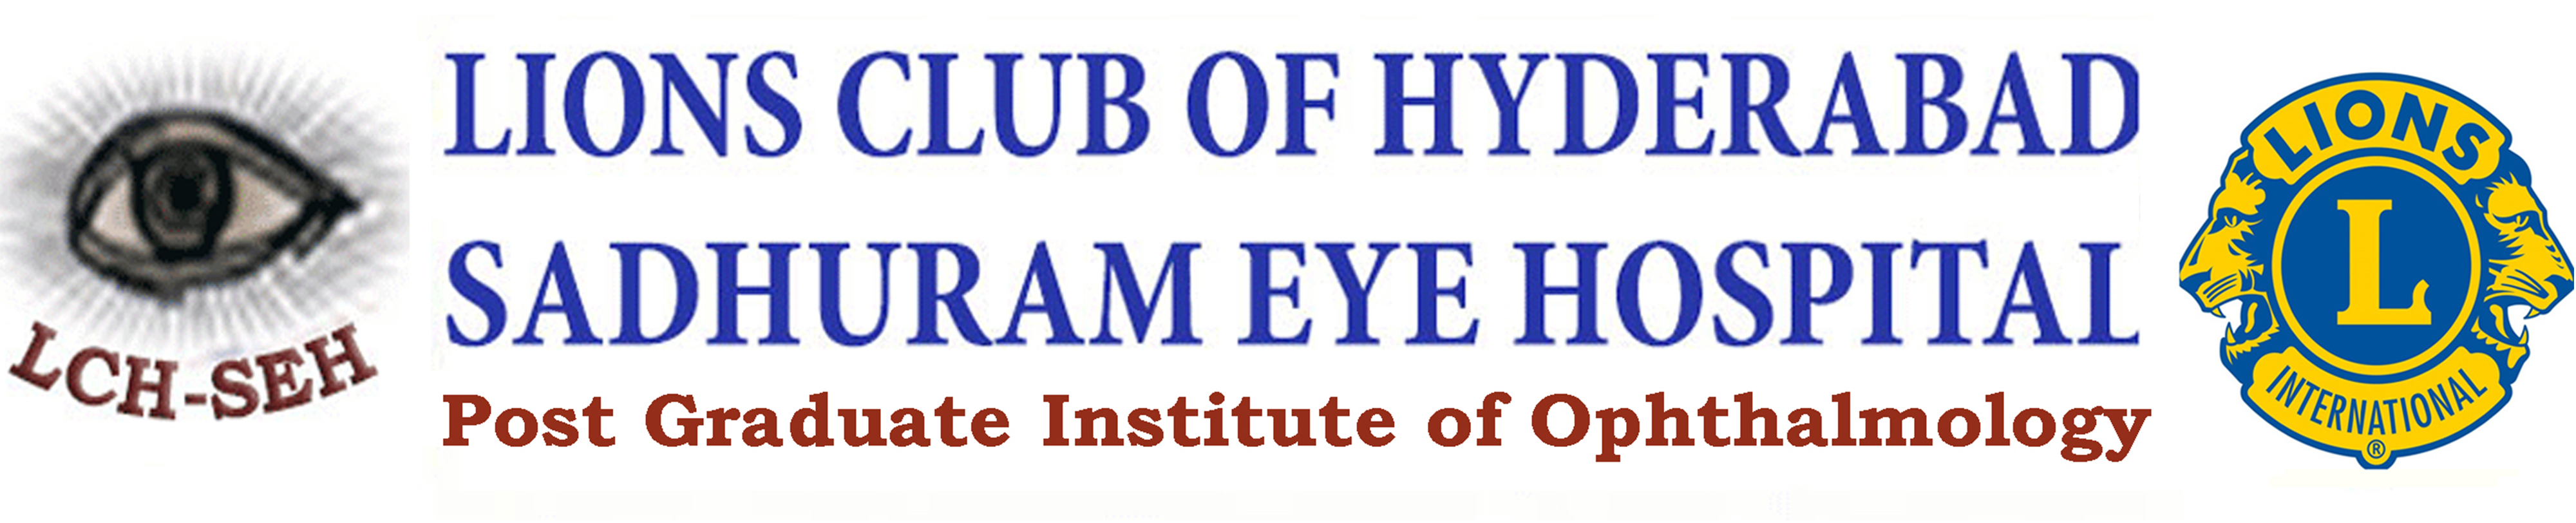 Lions Club of Hyderabad Sadhuram Eye Hospital|Healthcare|Medical Services